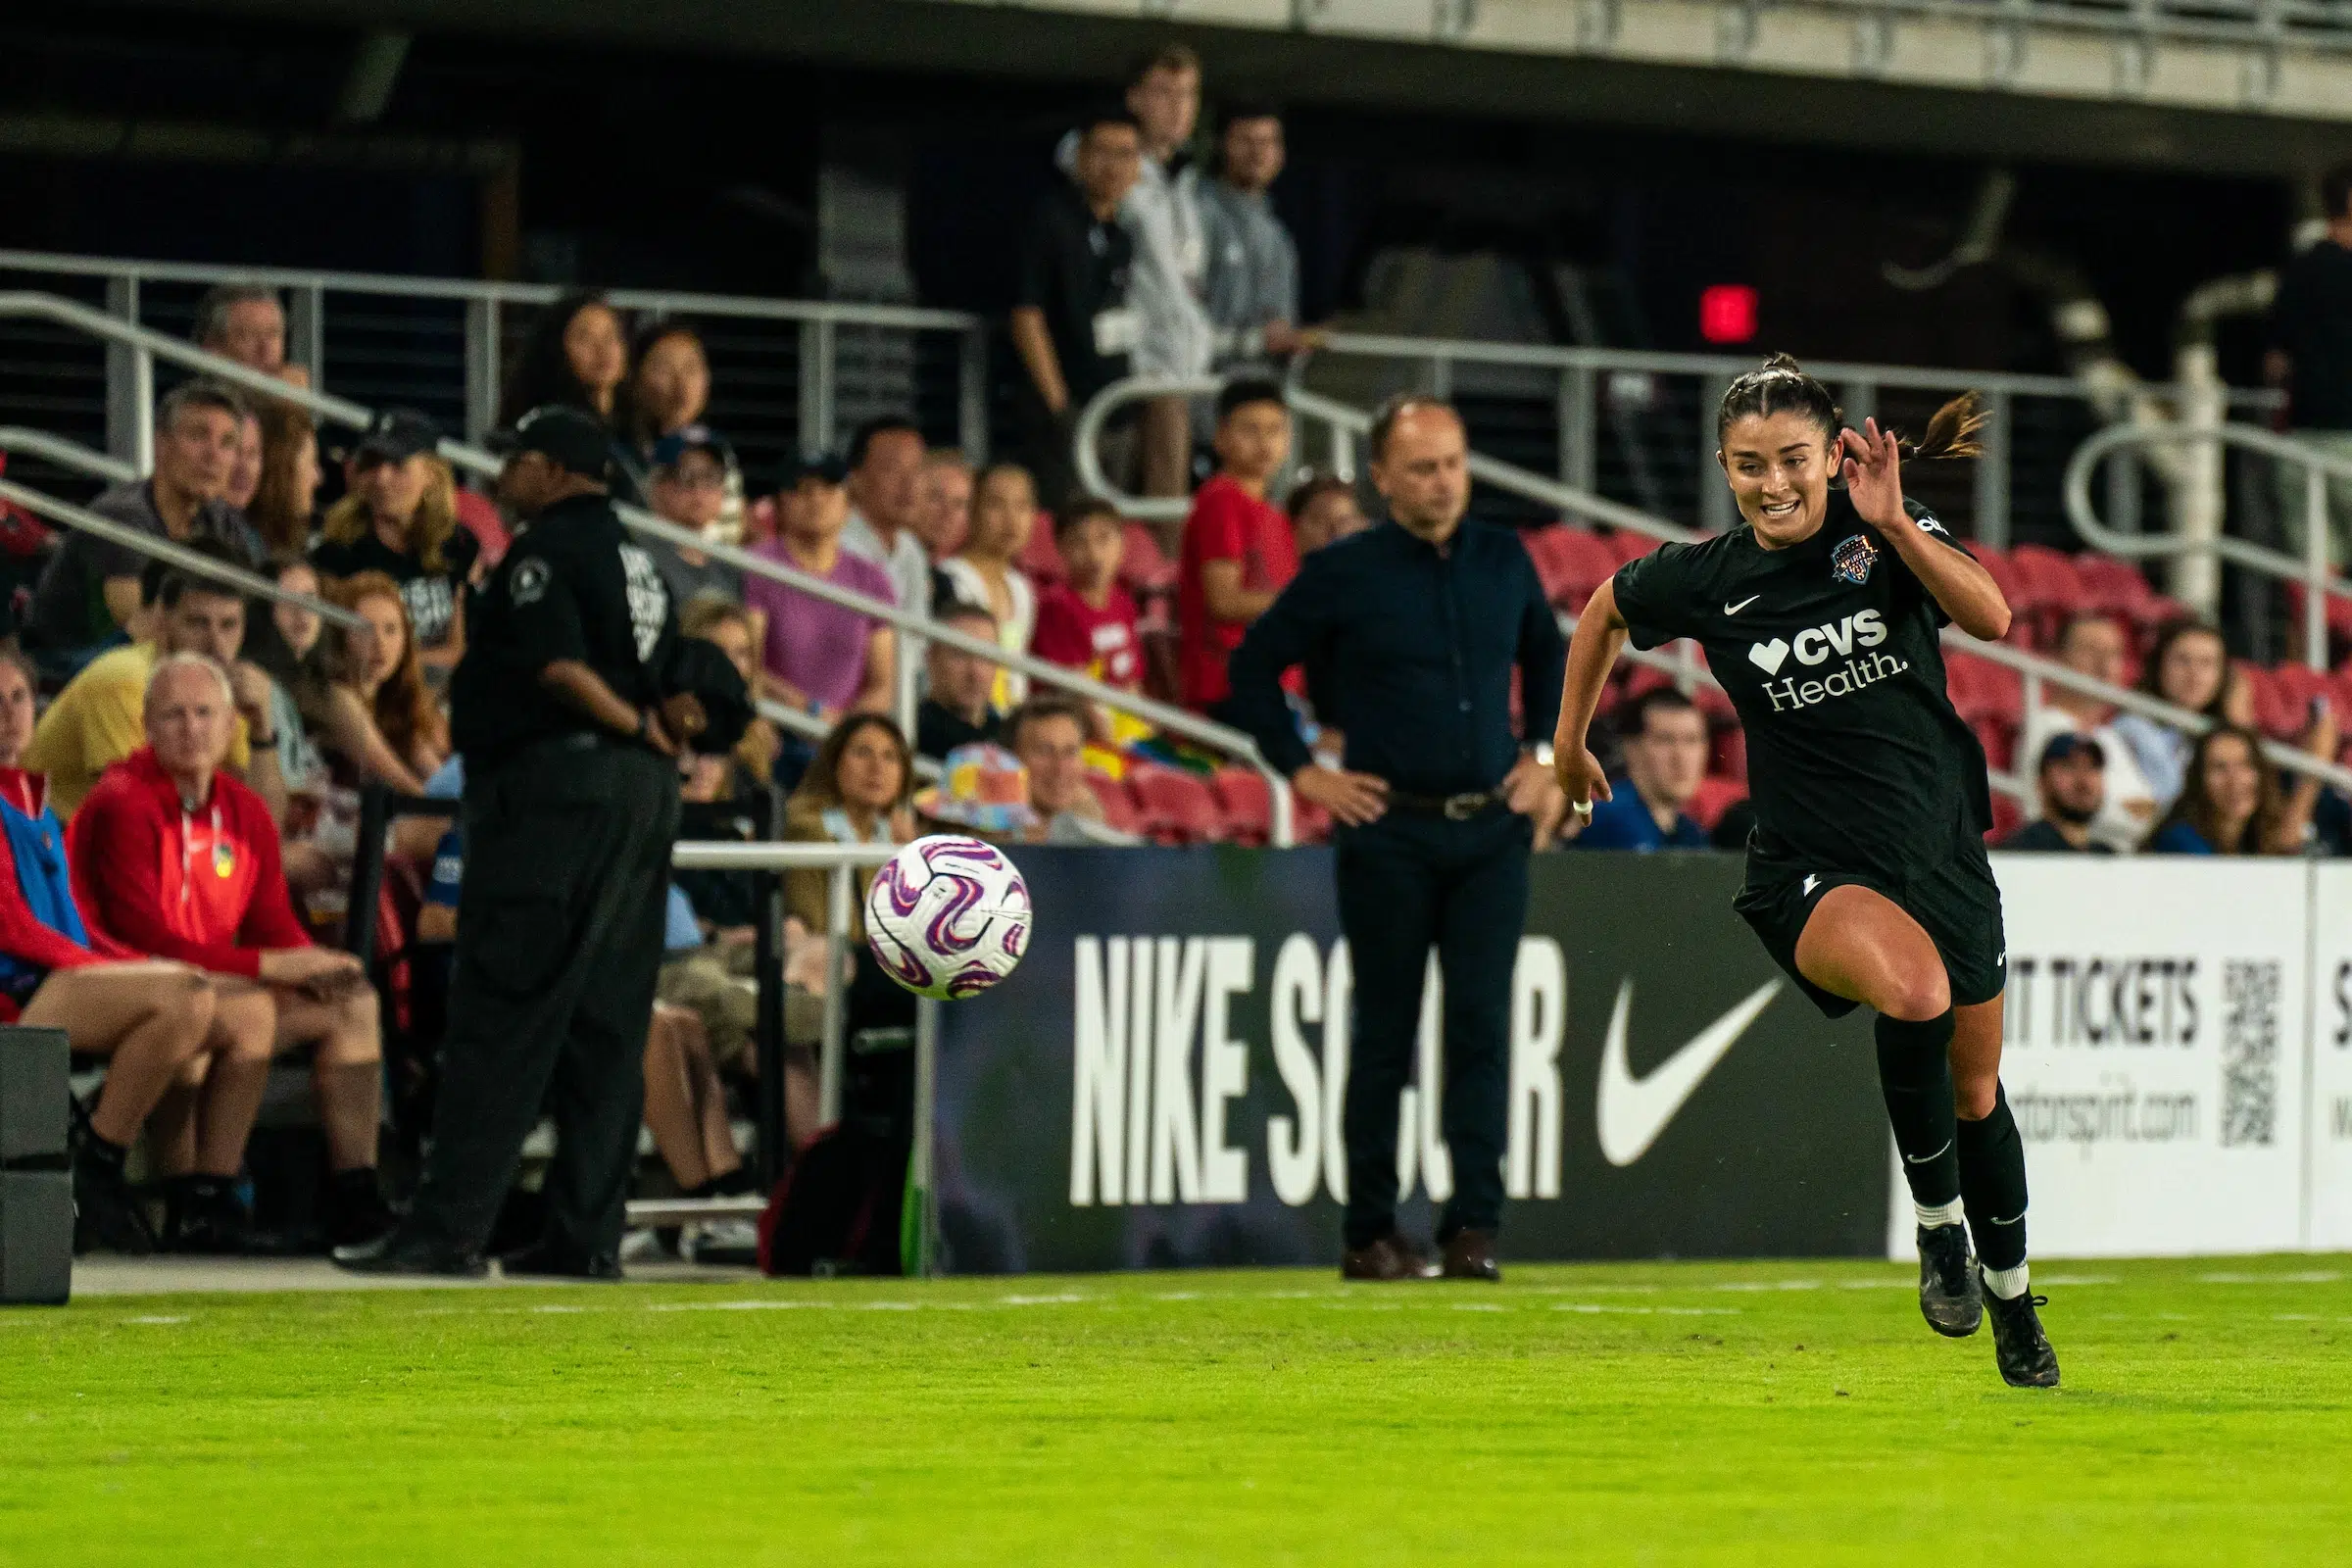 Marissa Sheva in a black uniform chases down a soccer ball.